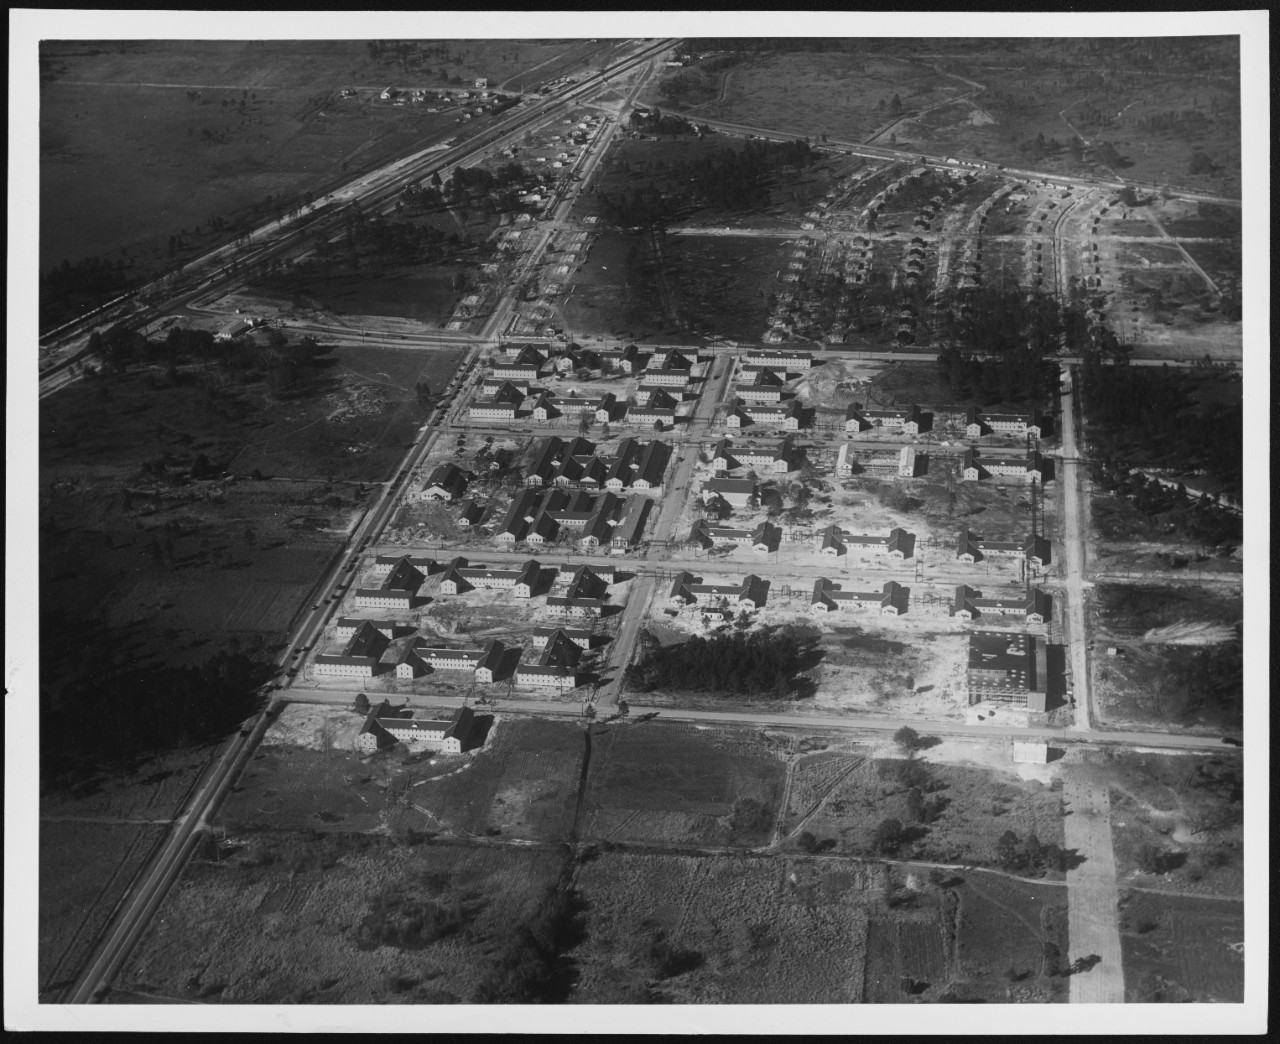 U.S. Naval Air Station, Jacksonville, Florida. February 15, 1941